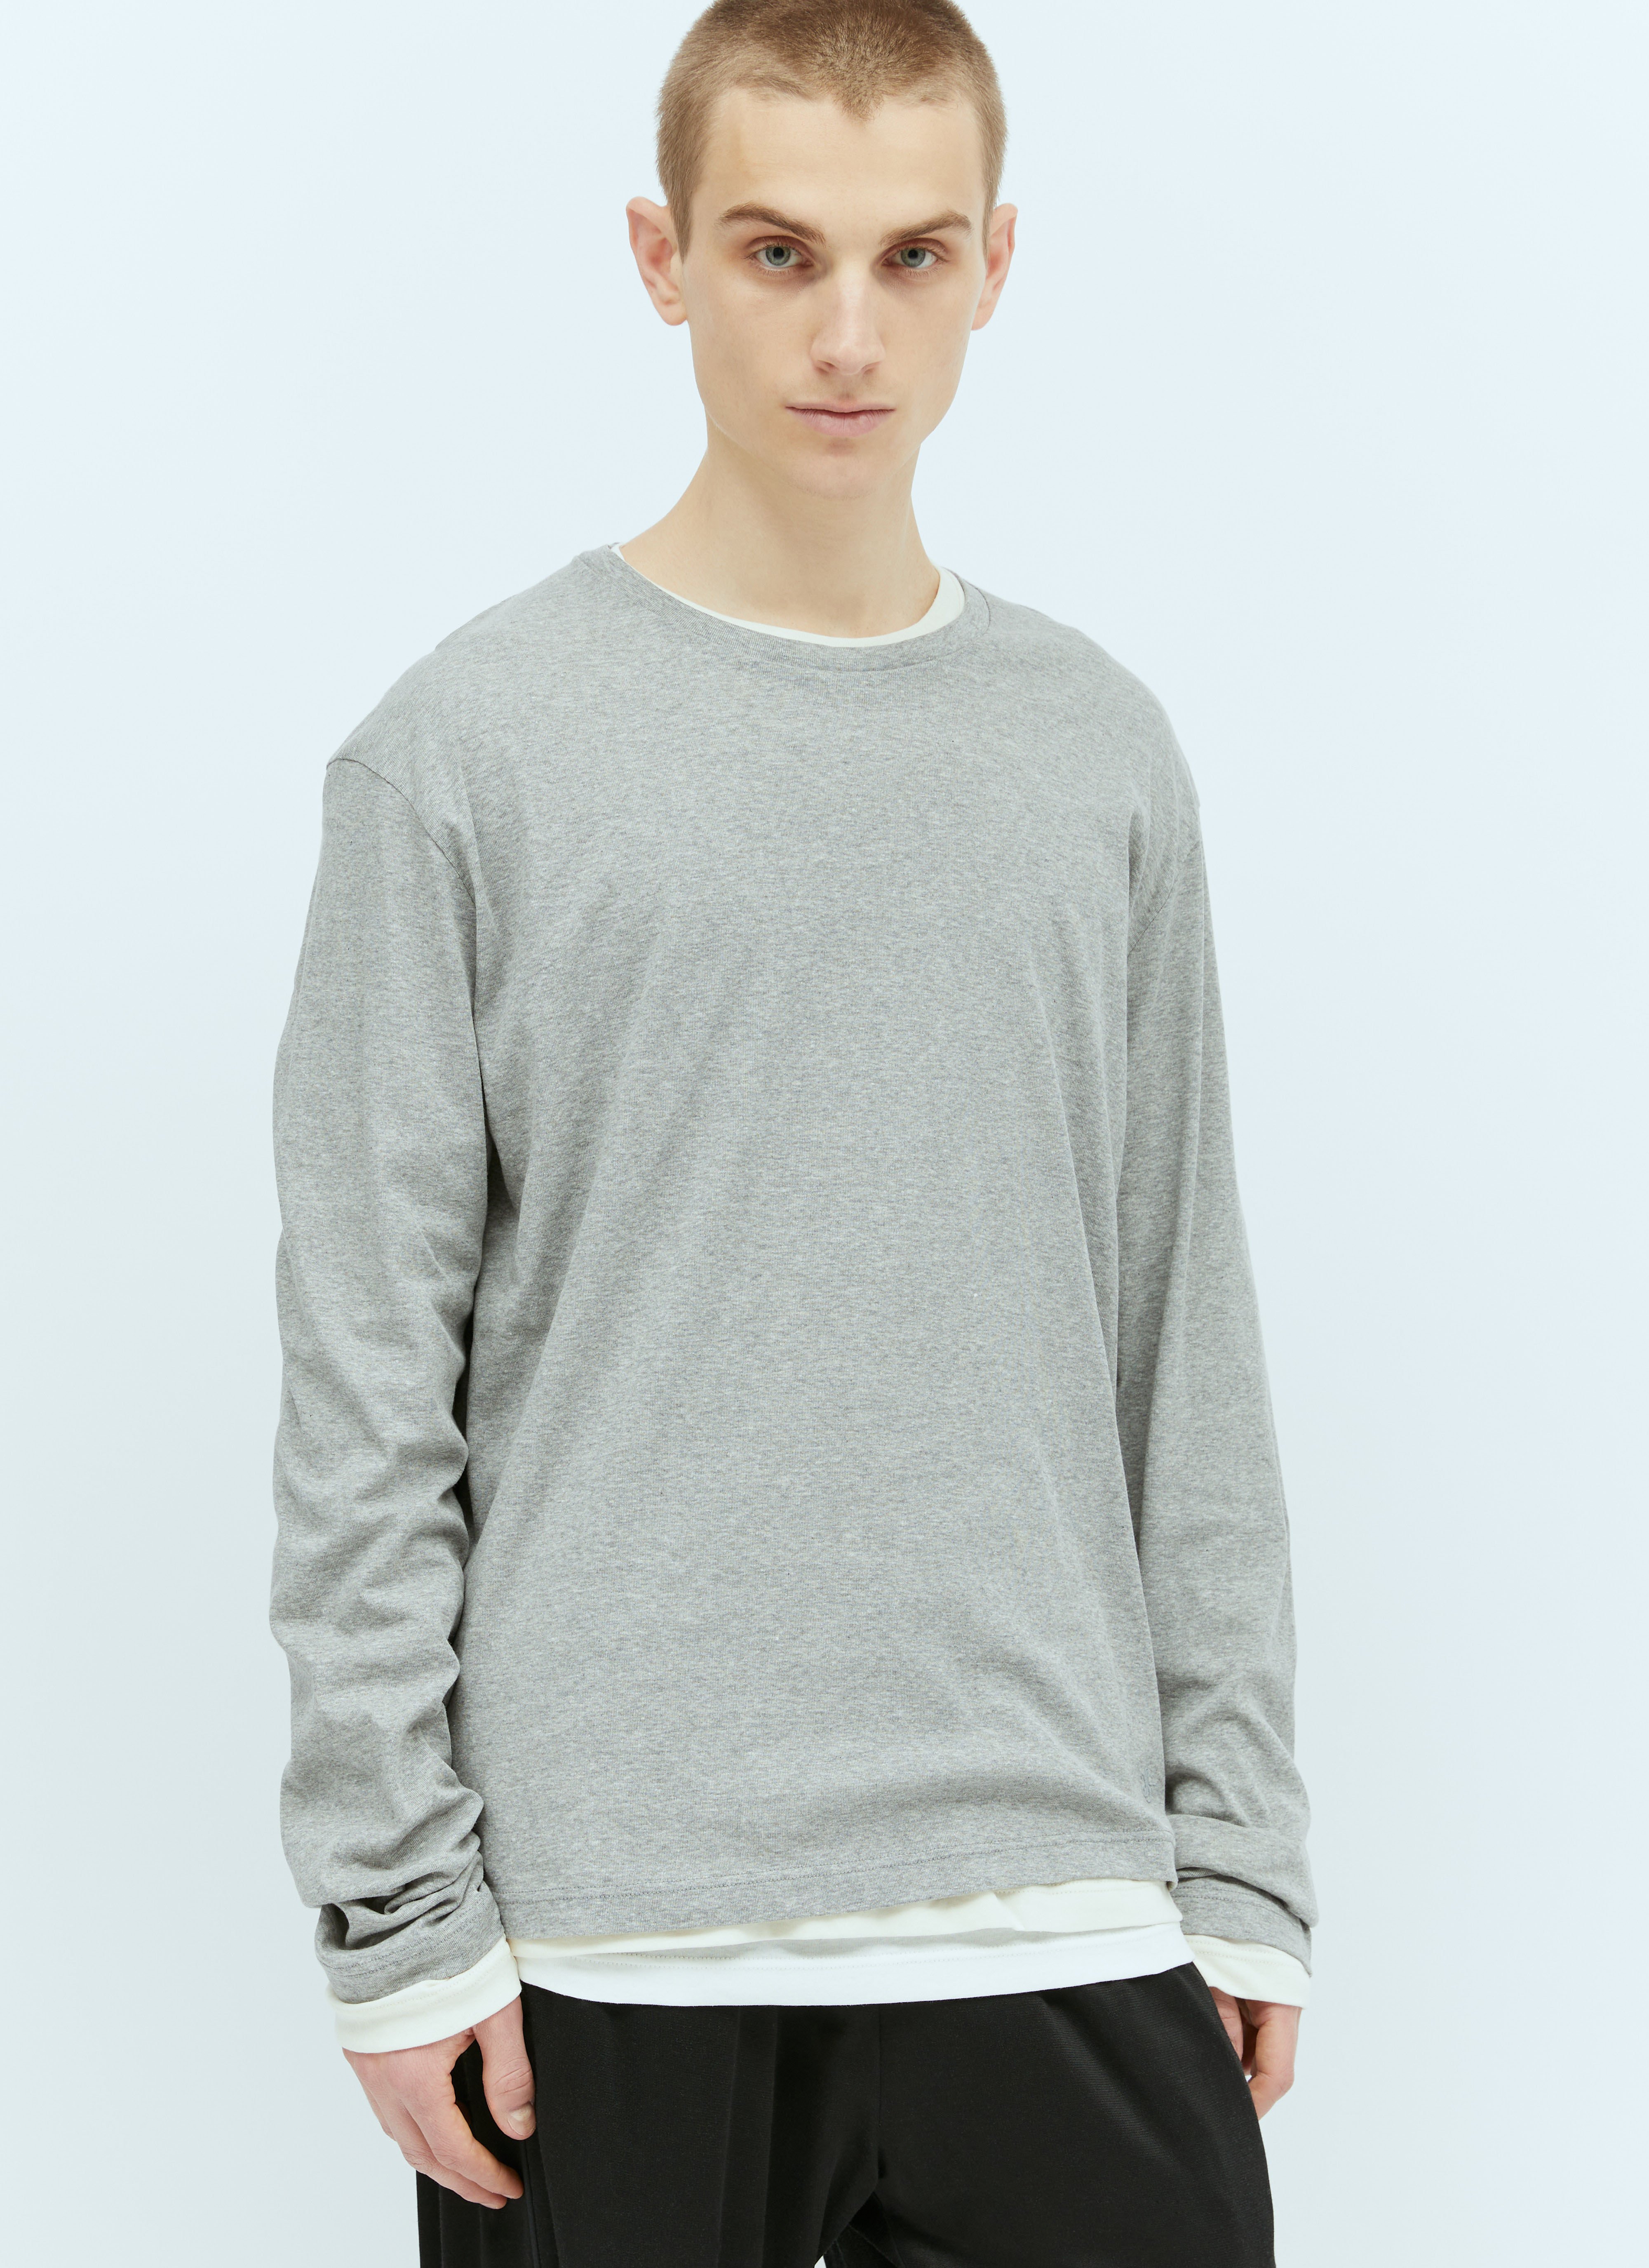 Jil Sander+ Tシャツ 3枚セット ホワイト jsp0156005